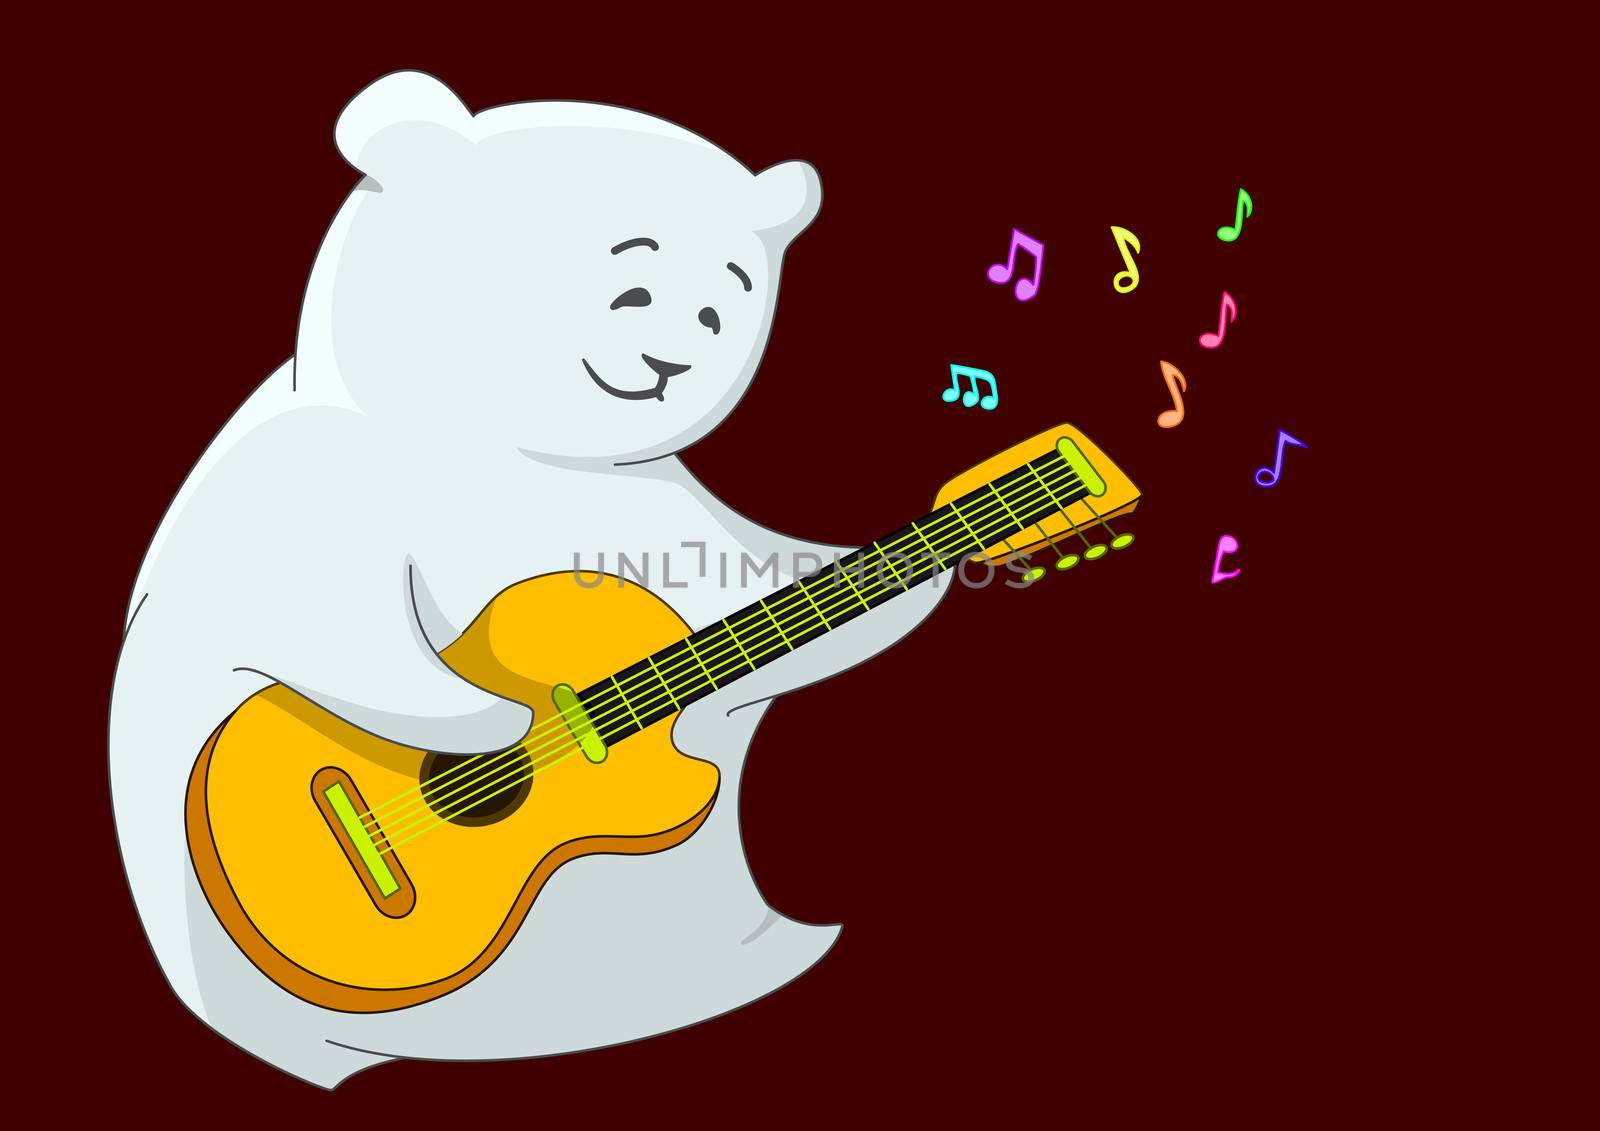 Cartoon toy teddy bear musician playing a guitar.